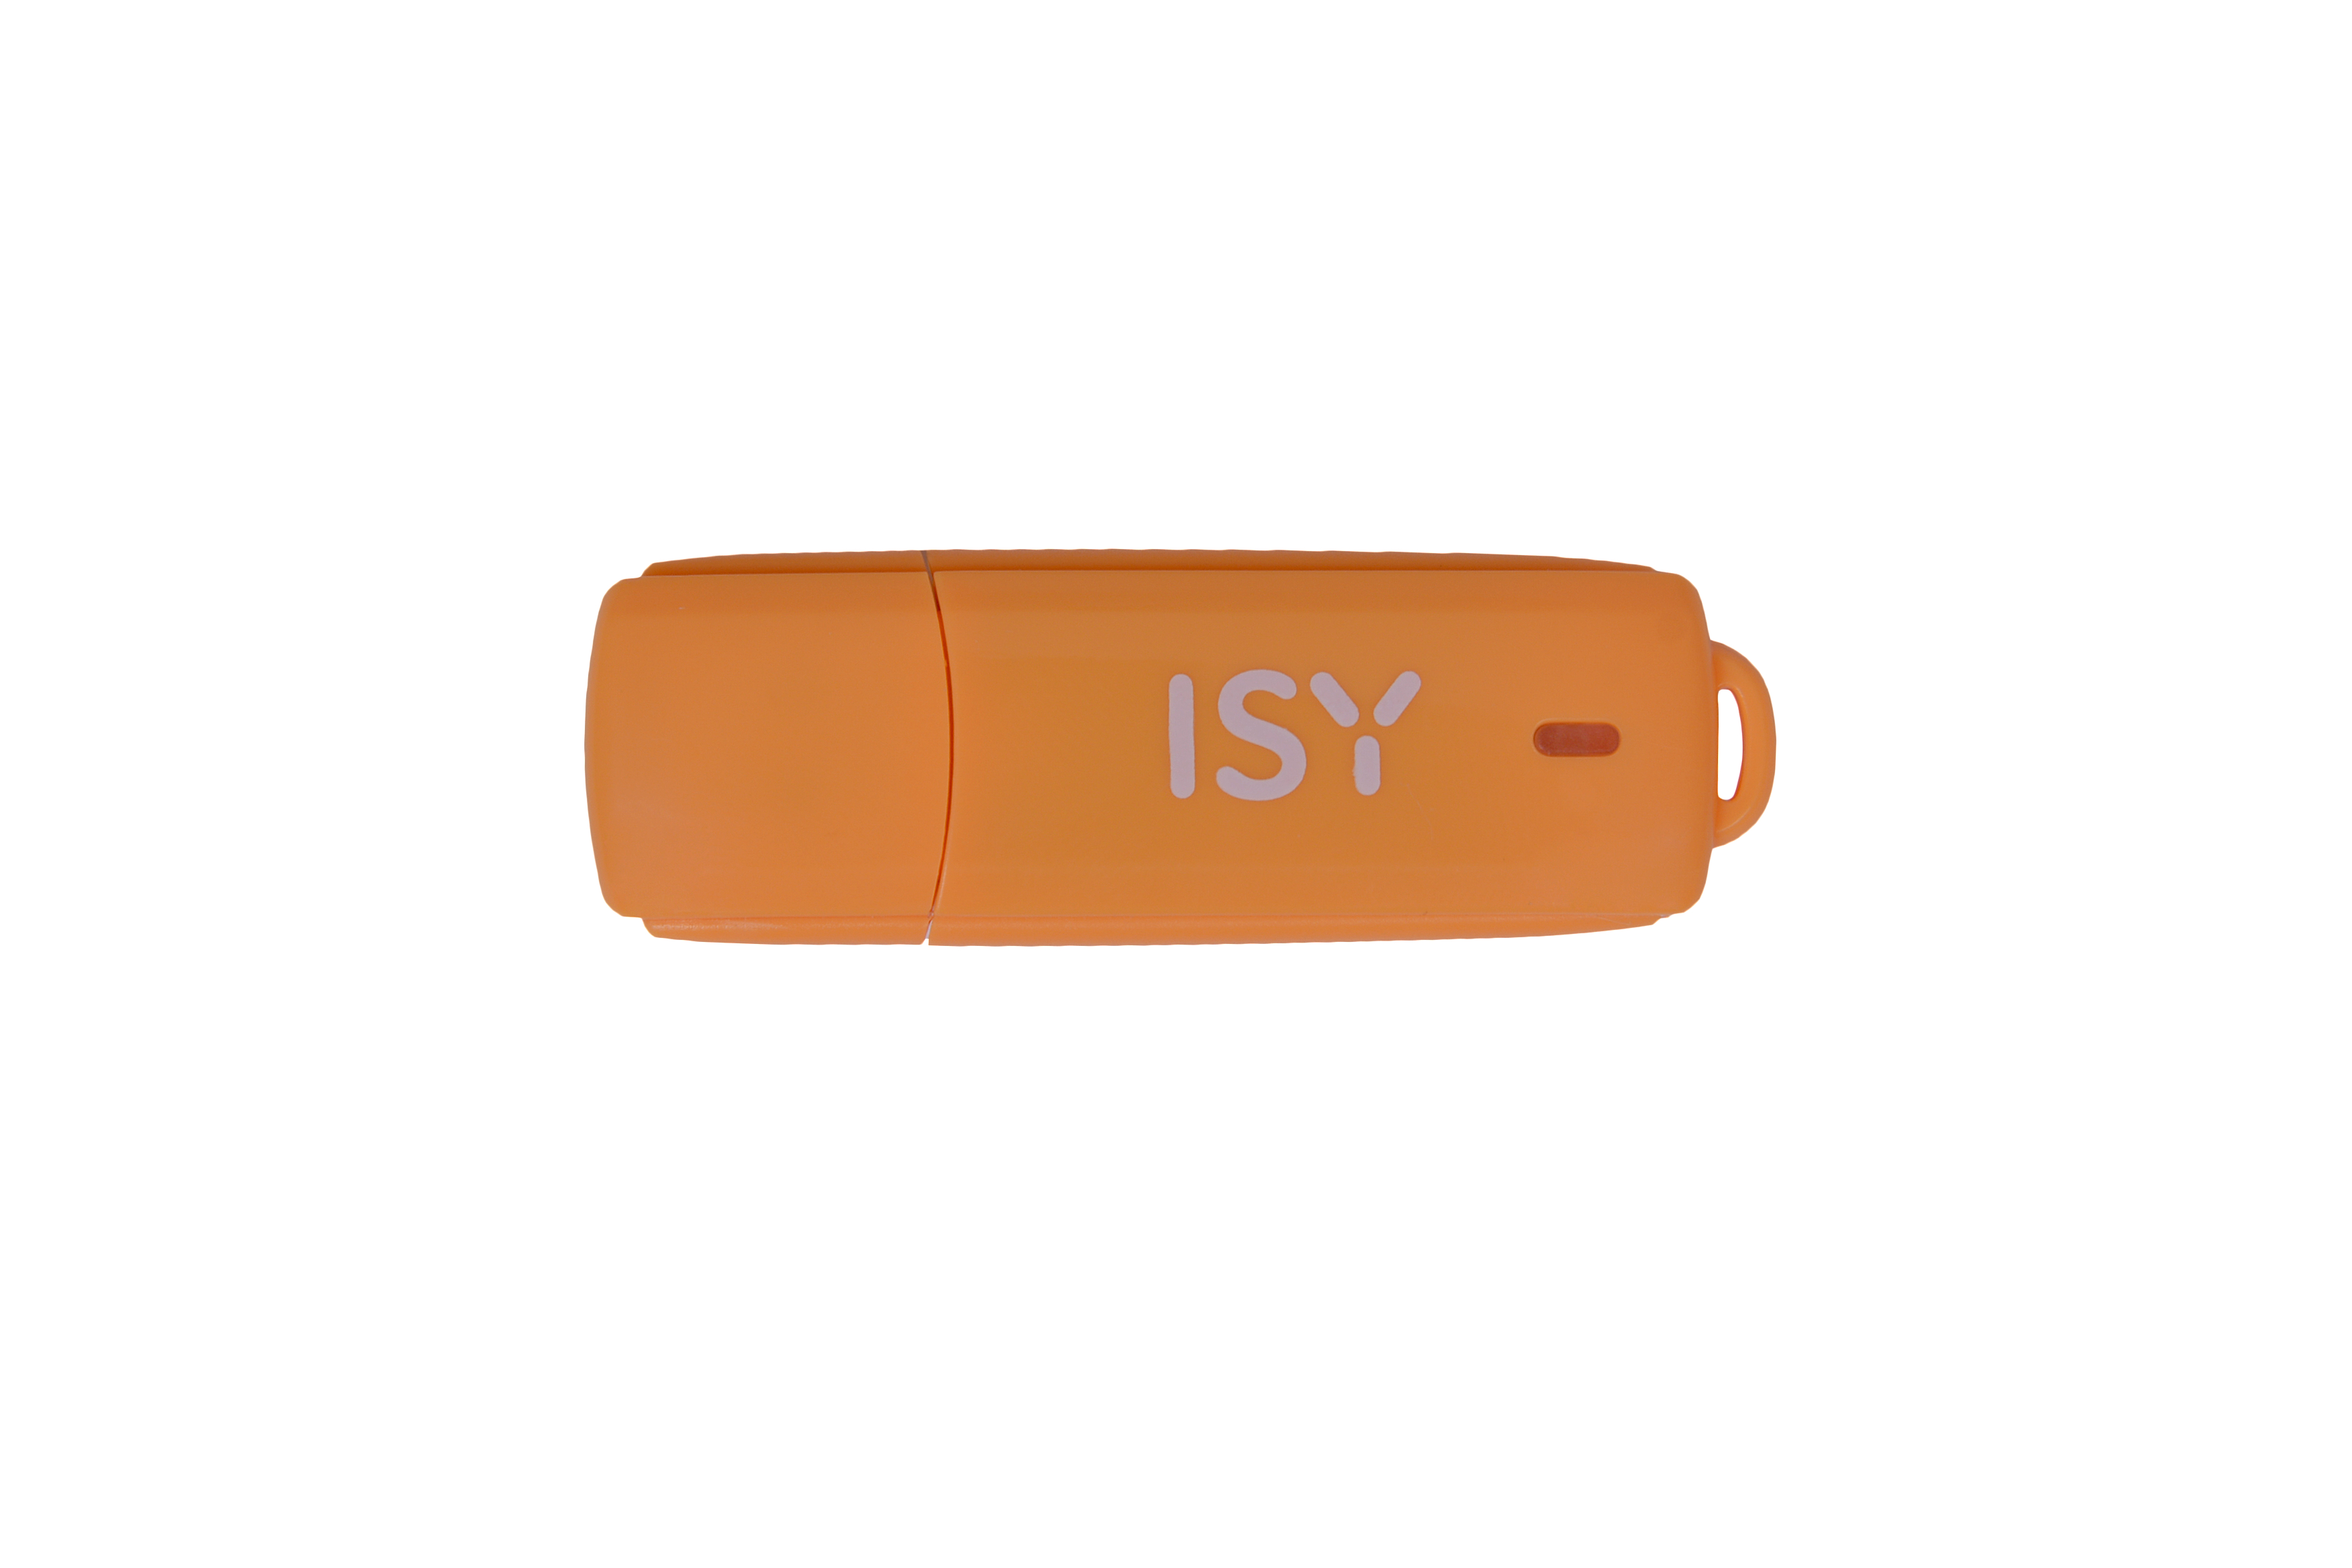 ISY 4 Neon-Grün, Neon-Orange, MB/s, 64 GB, Neon-Blau, IMU-2300-NEON USB-Stick, Neon-Pink